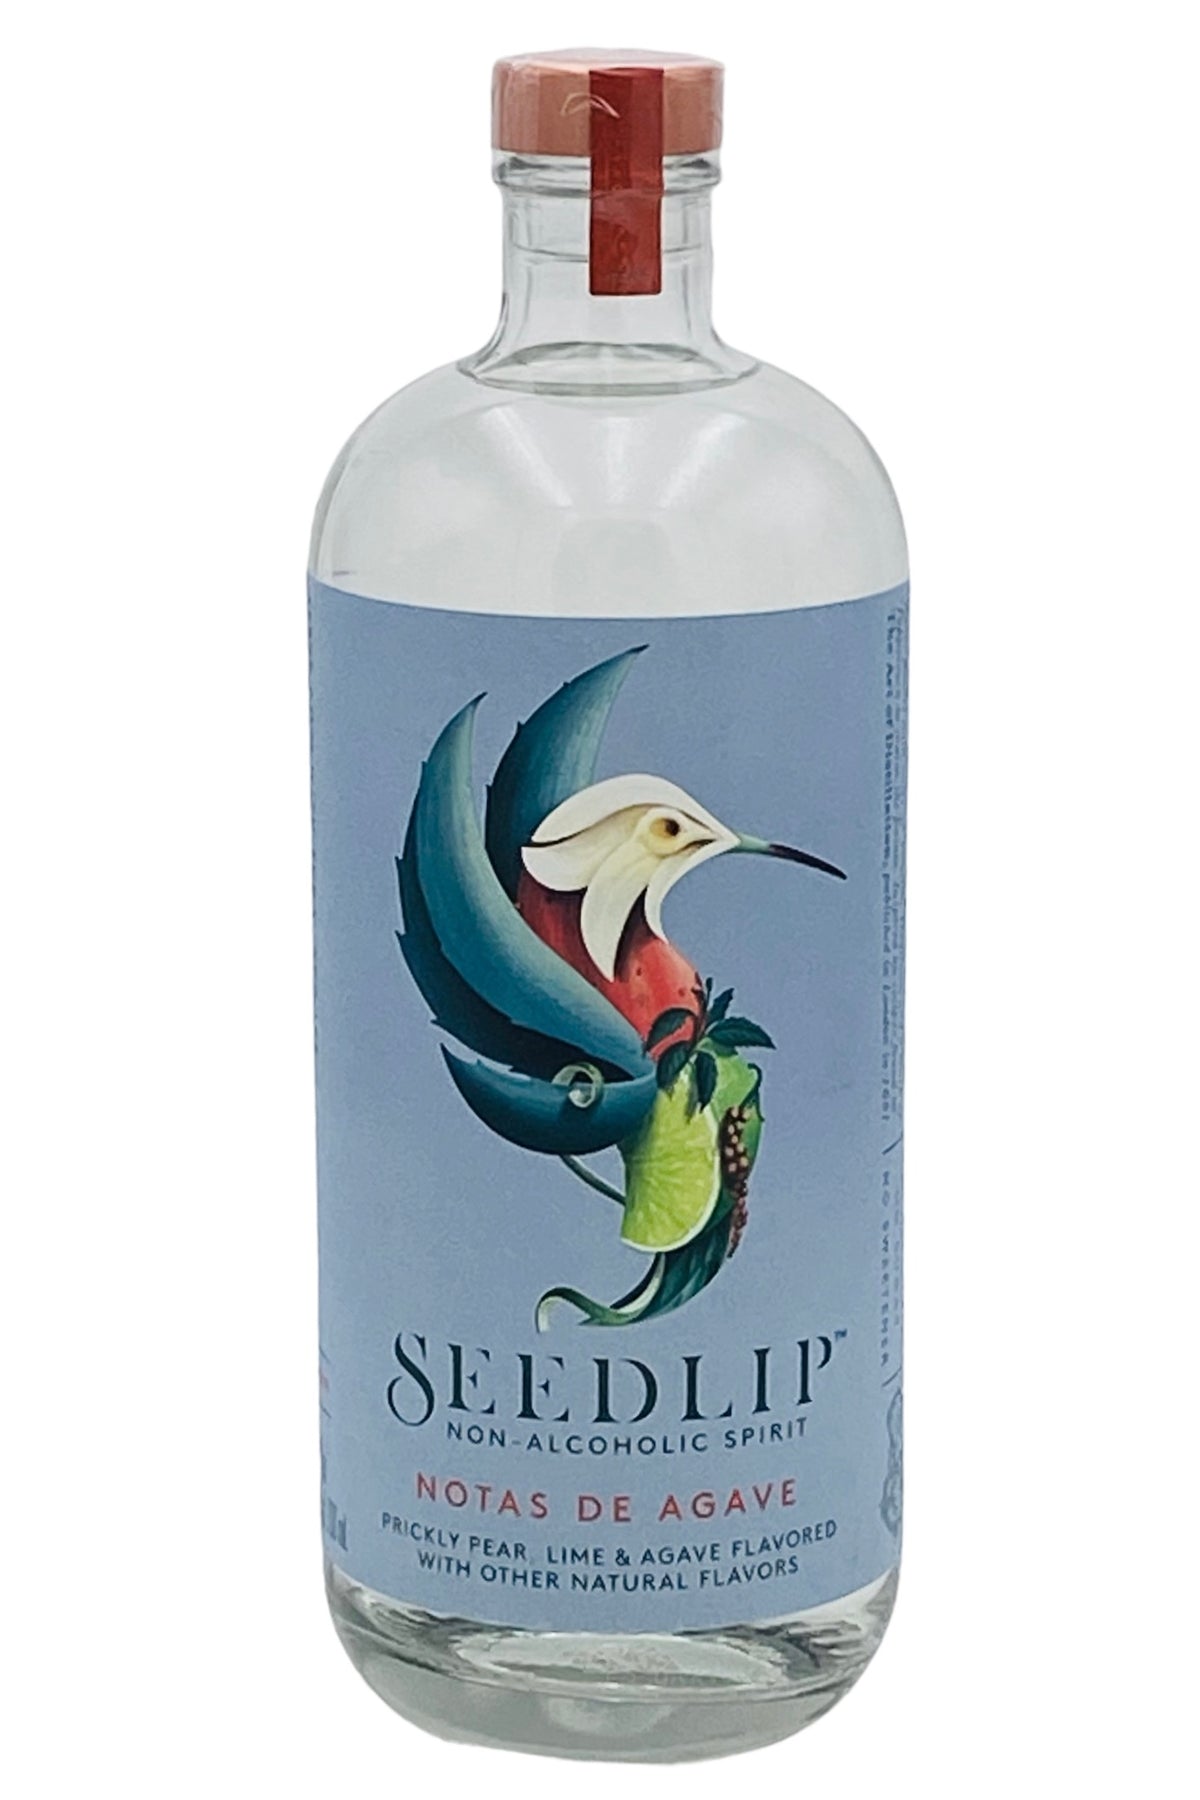 Seedlip Notas de Agave Nonalcoholic Spirit 700 ml